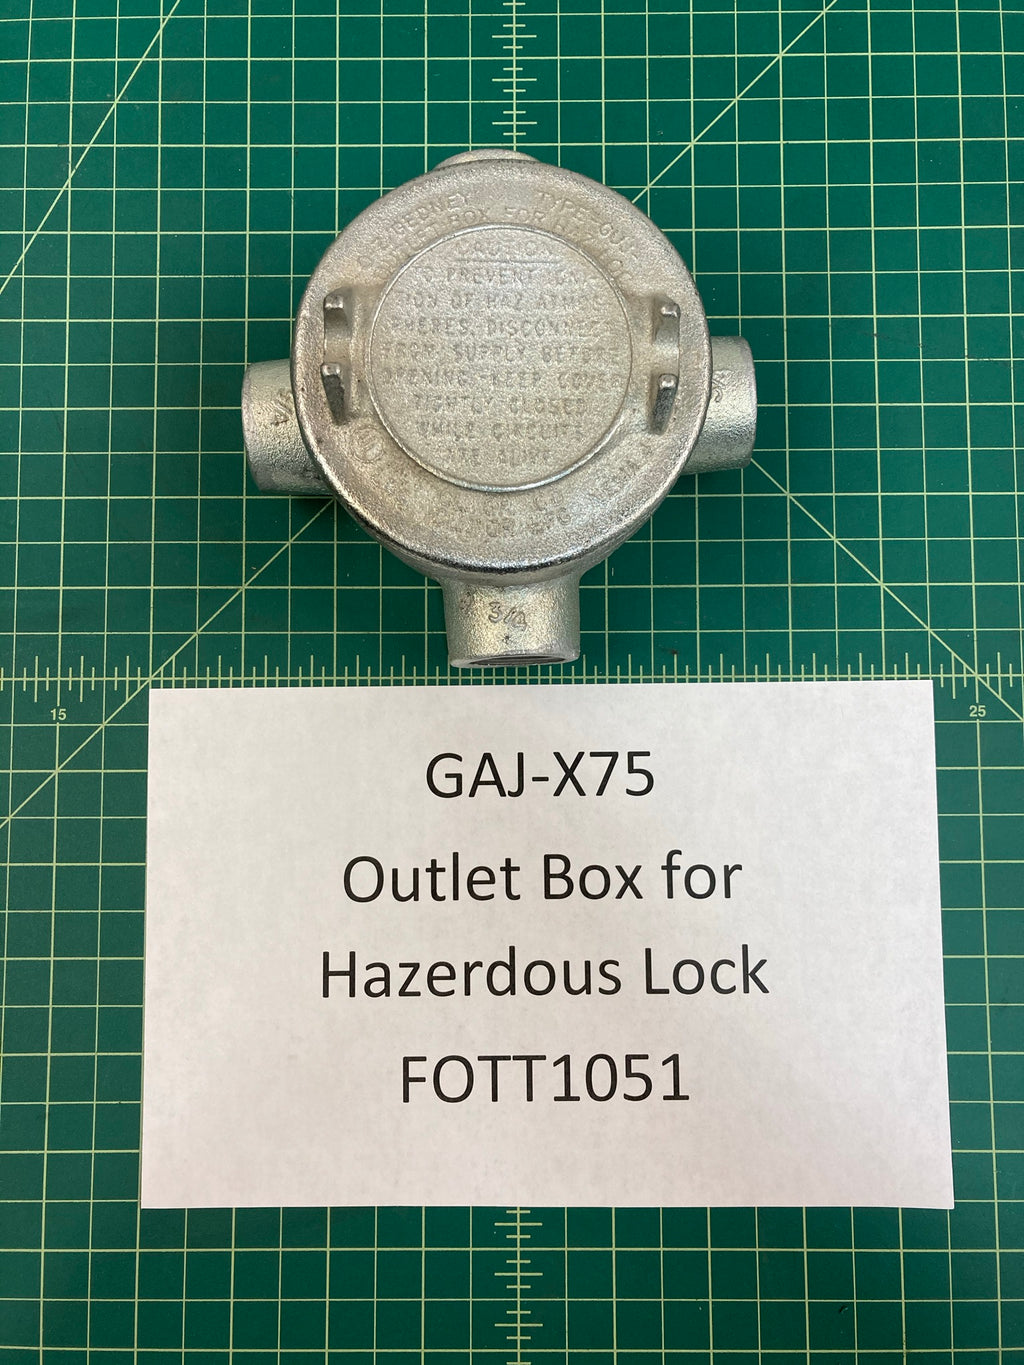 O-Z/Gedney GUAX/GUJX-75 Outlet Box 3/4" With GUJ Cover Hazardous Location